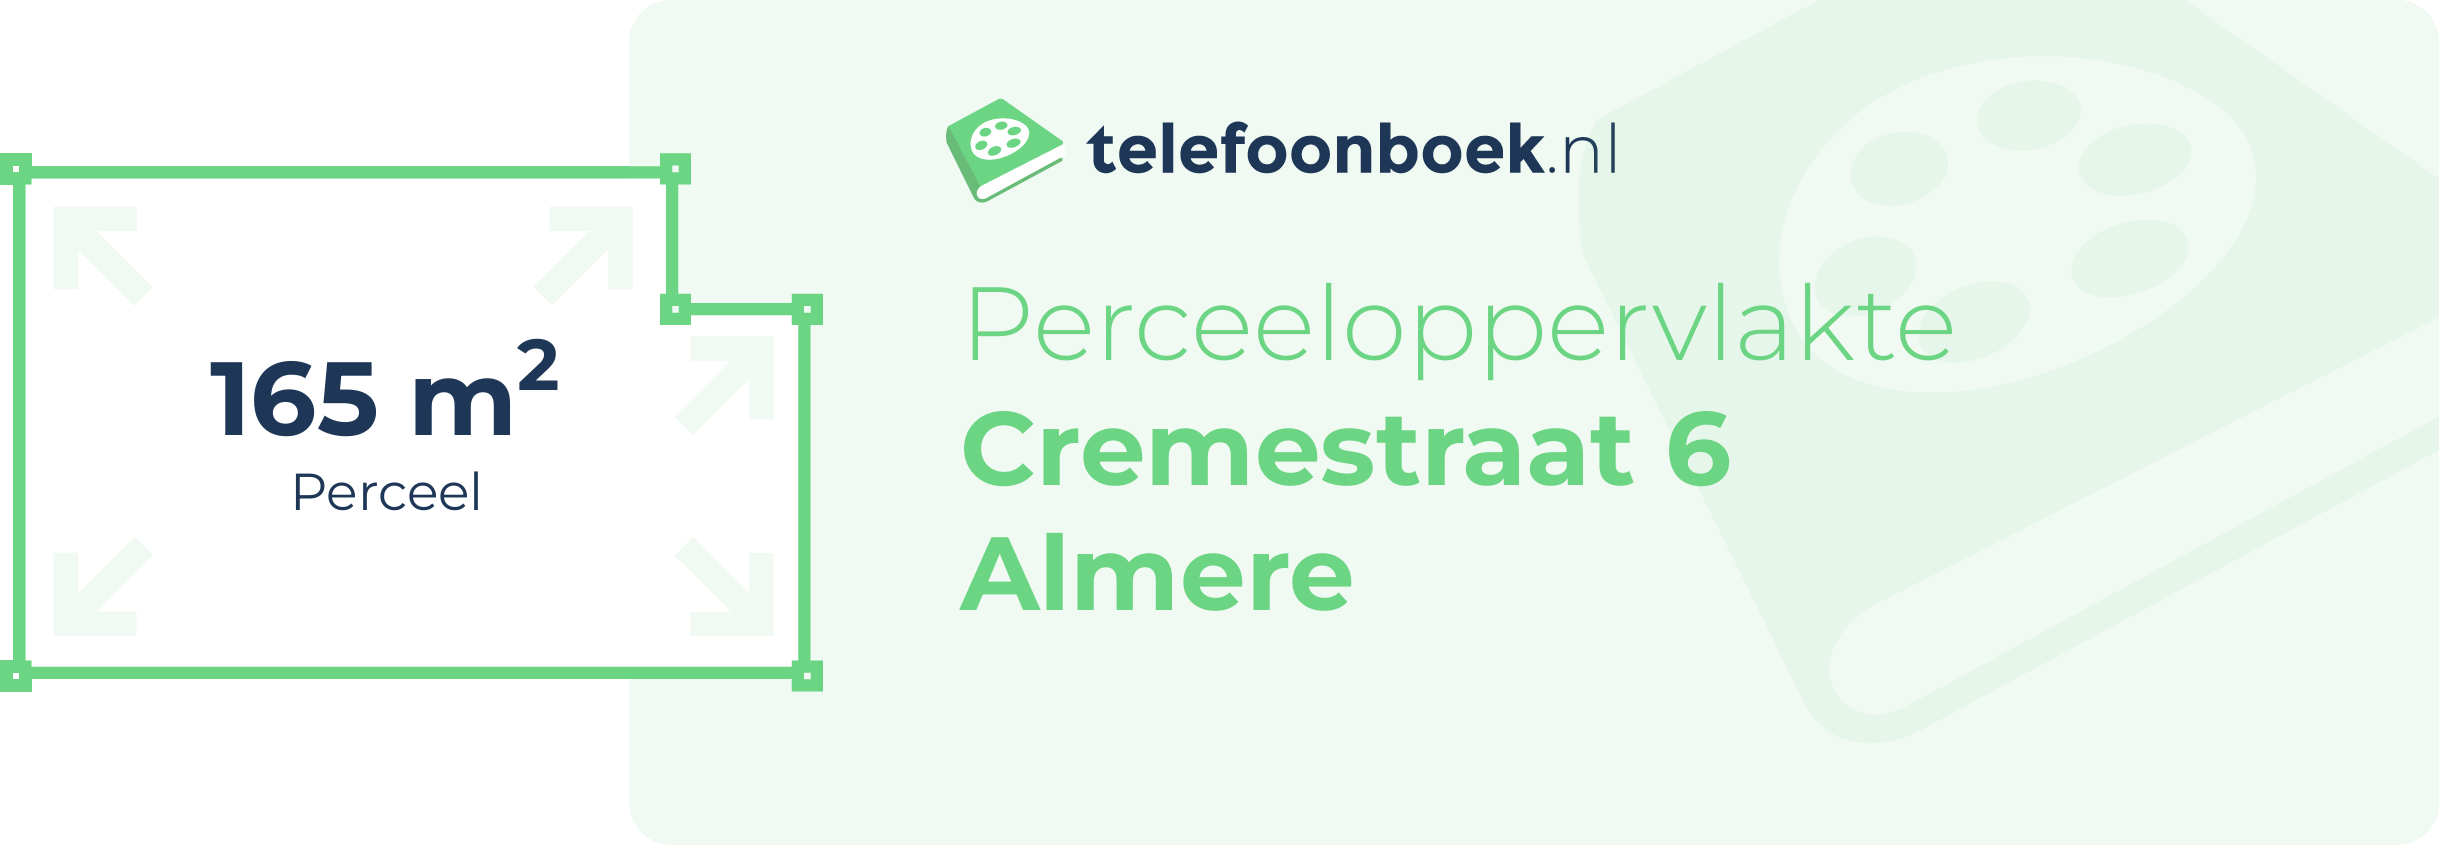 Perceeloppervlakte Cremestraat 6 Almere